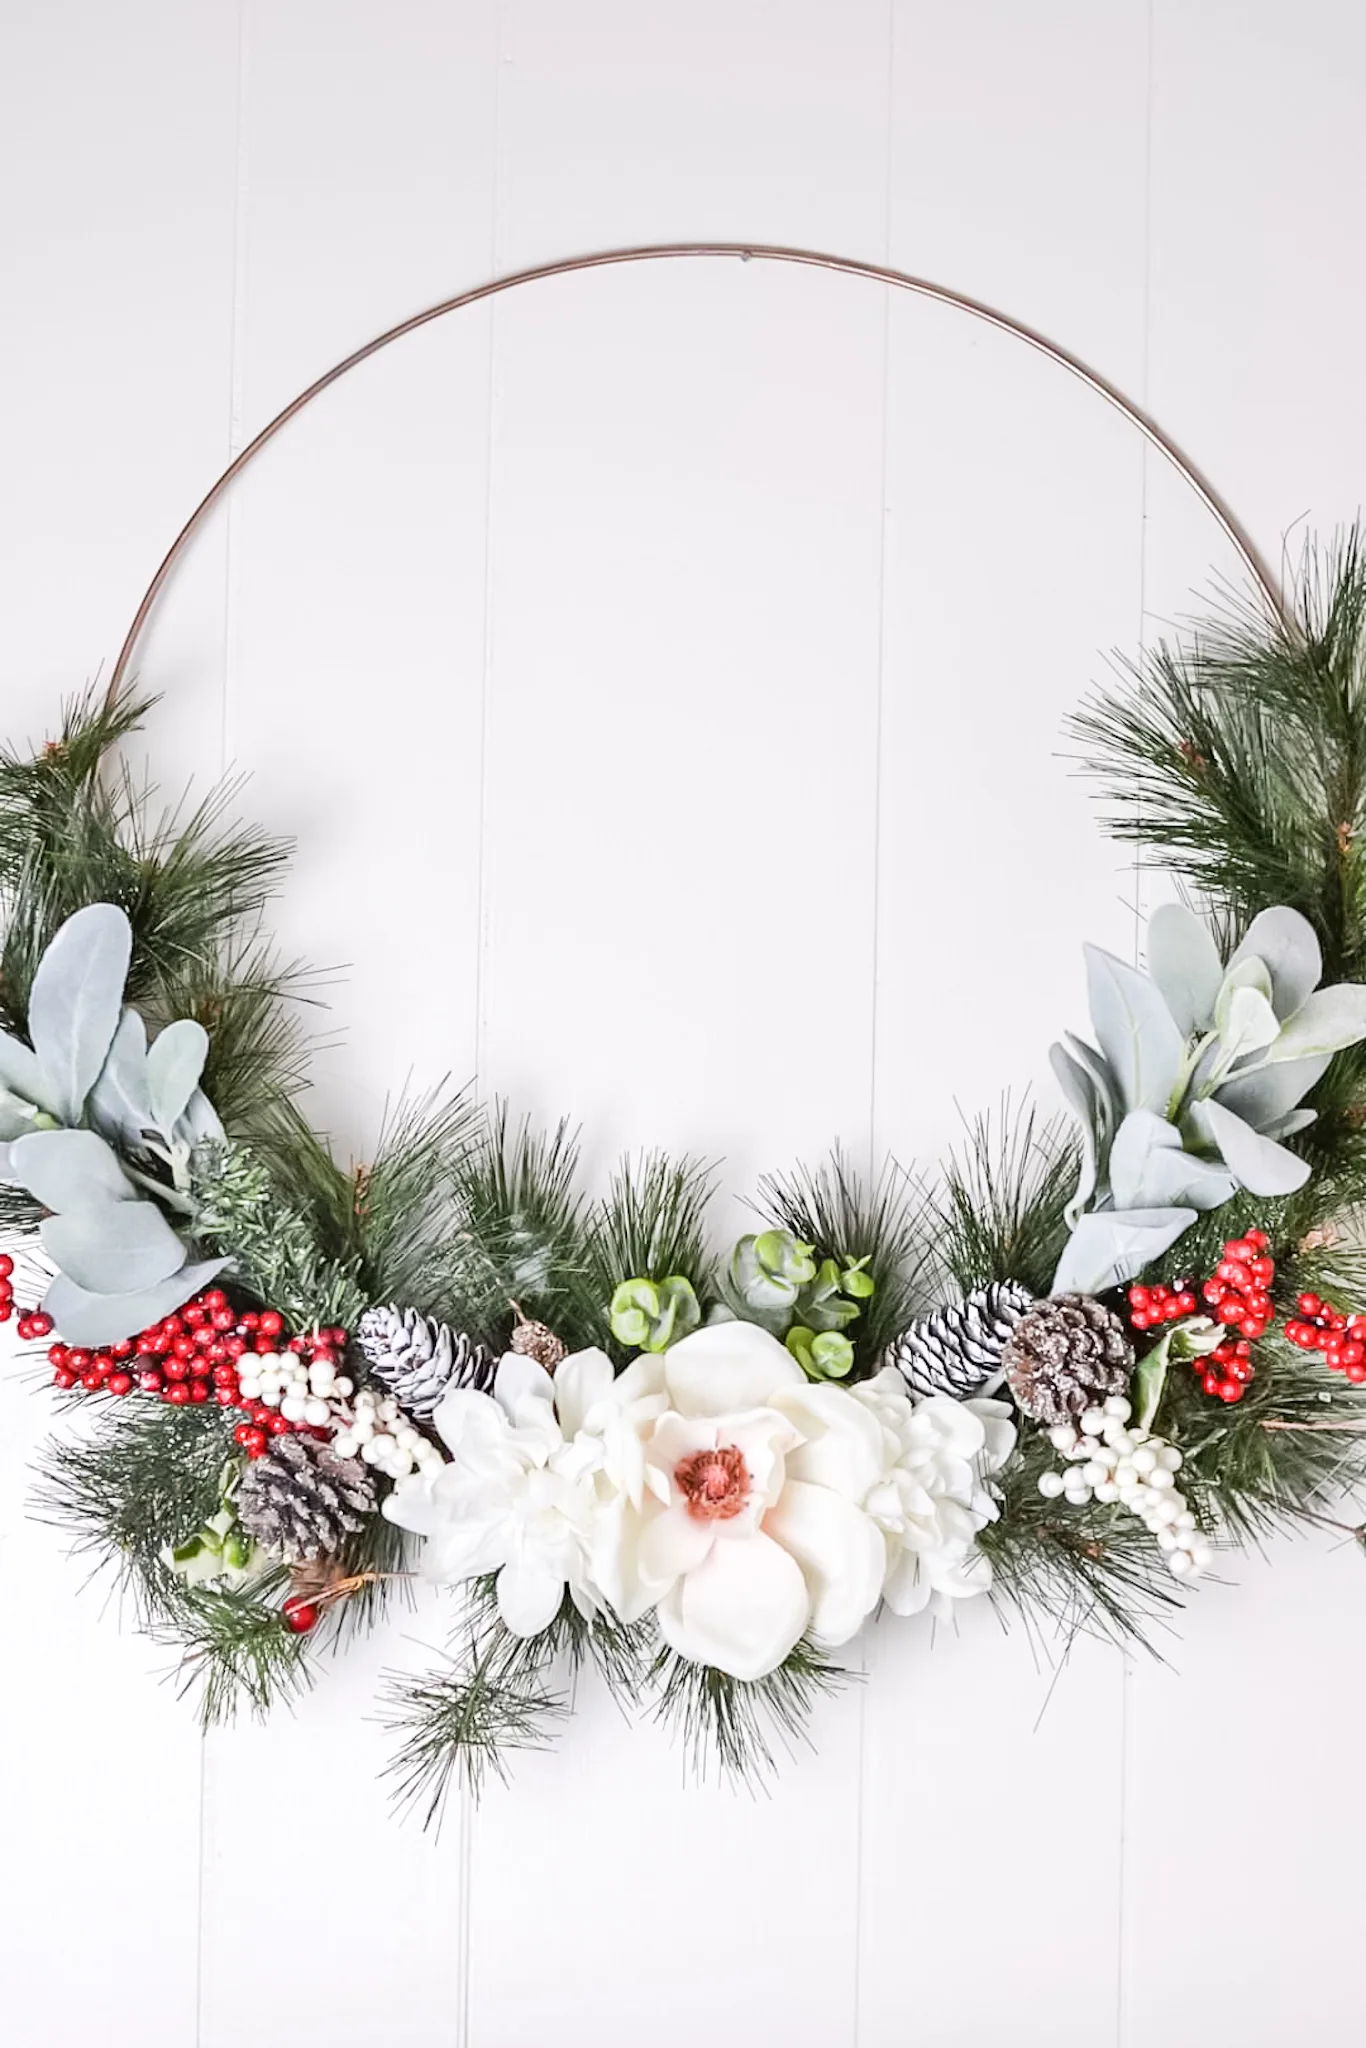 DIY Modern Hoop Wreath For Christmas